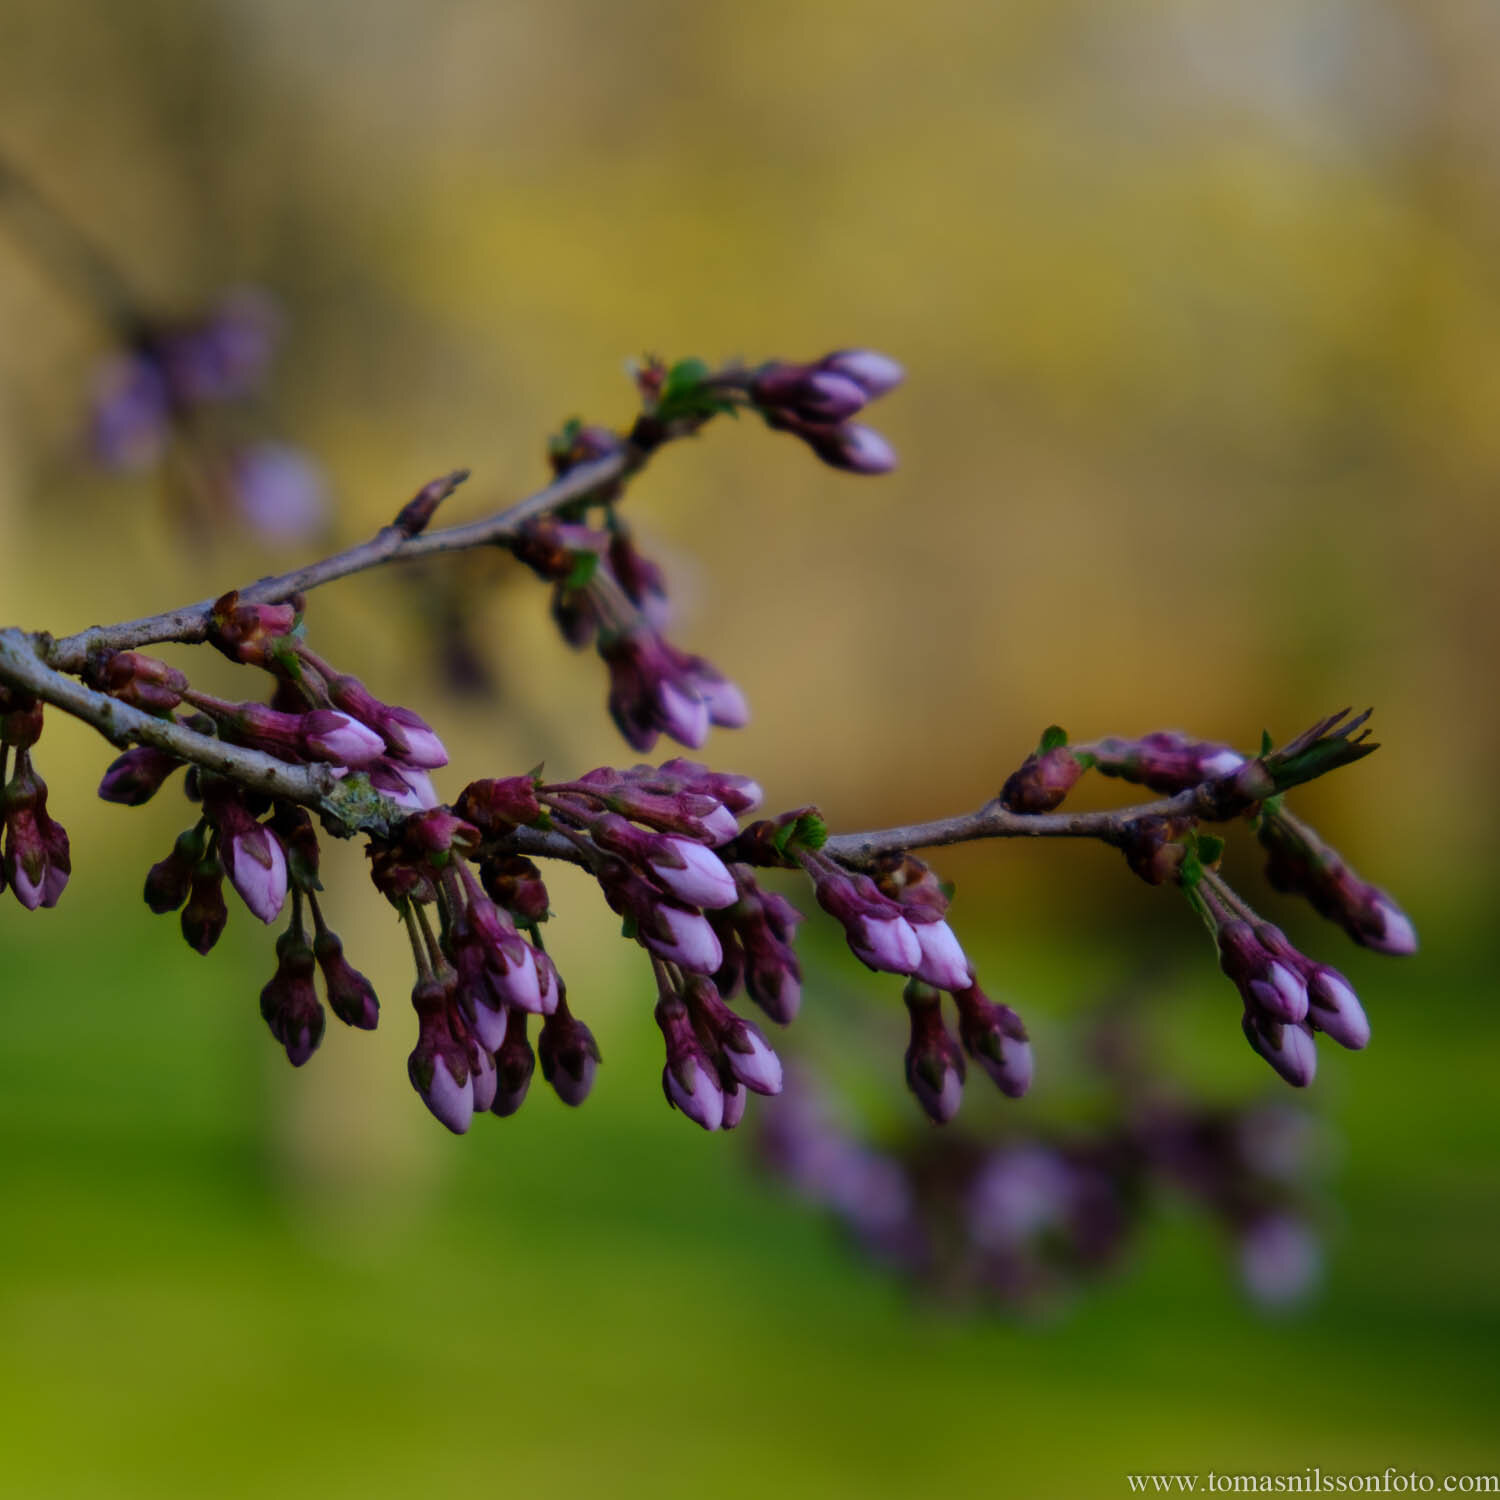 Day 115 - April 25: Purple Buds